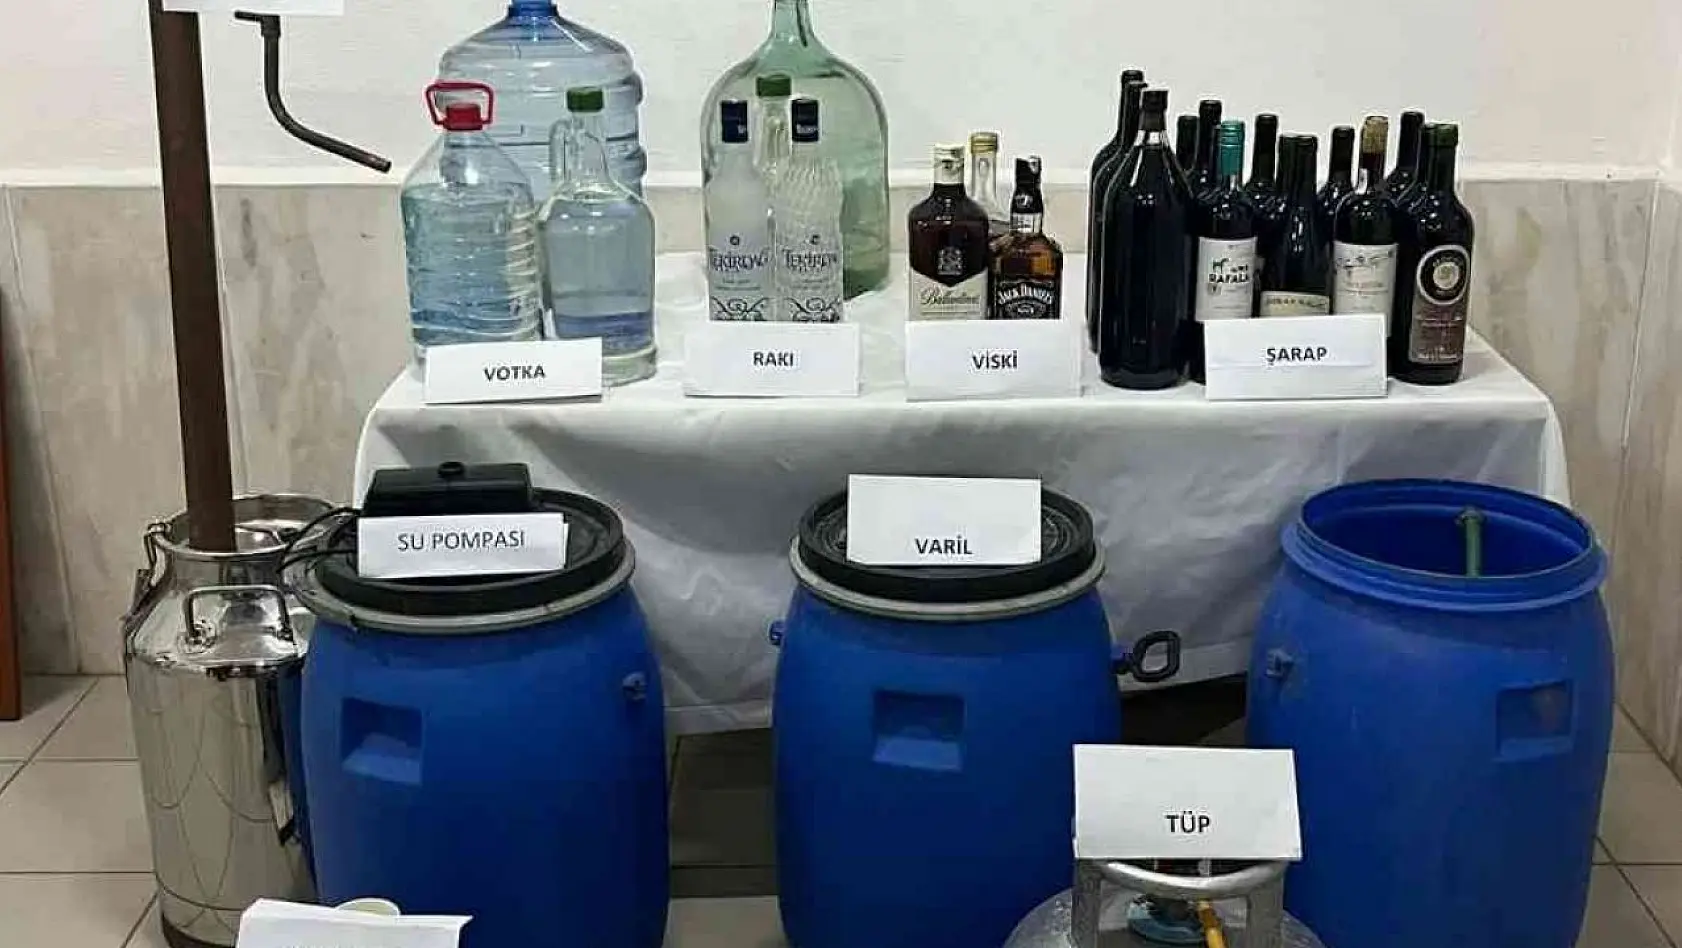 Didim'de 350 litre kaçak içki ele geçirildi